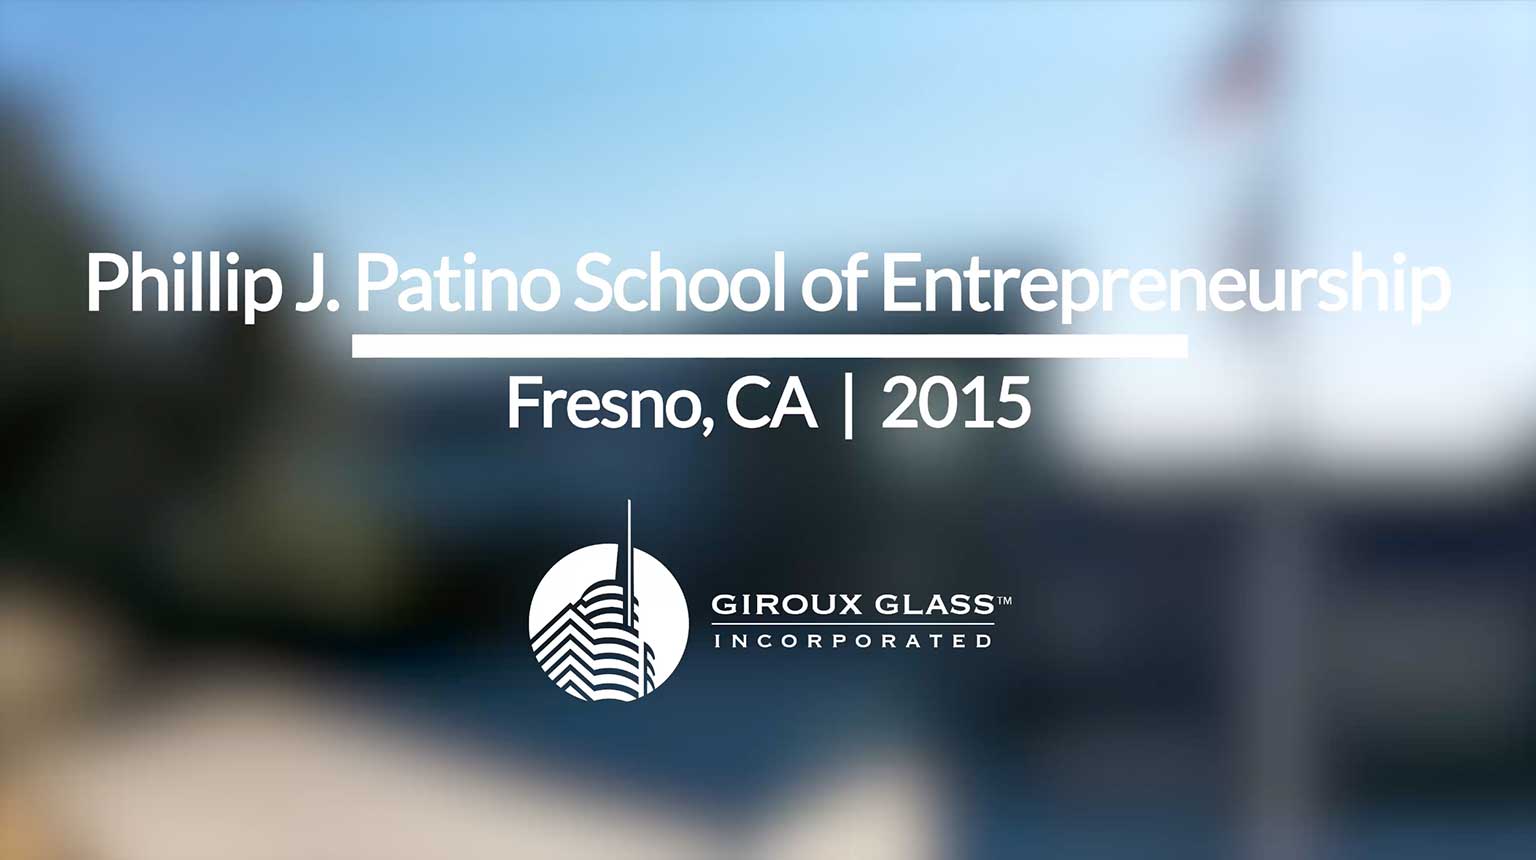 Phillip J. Patino School of Entrepreneurship